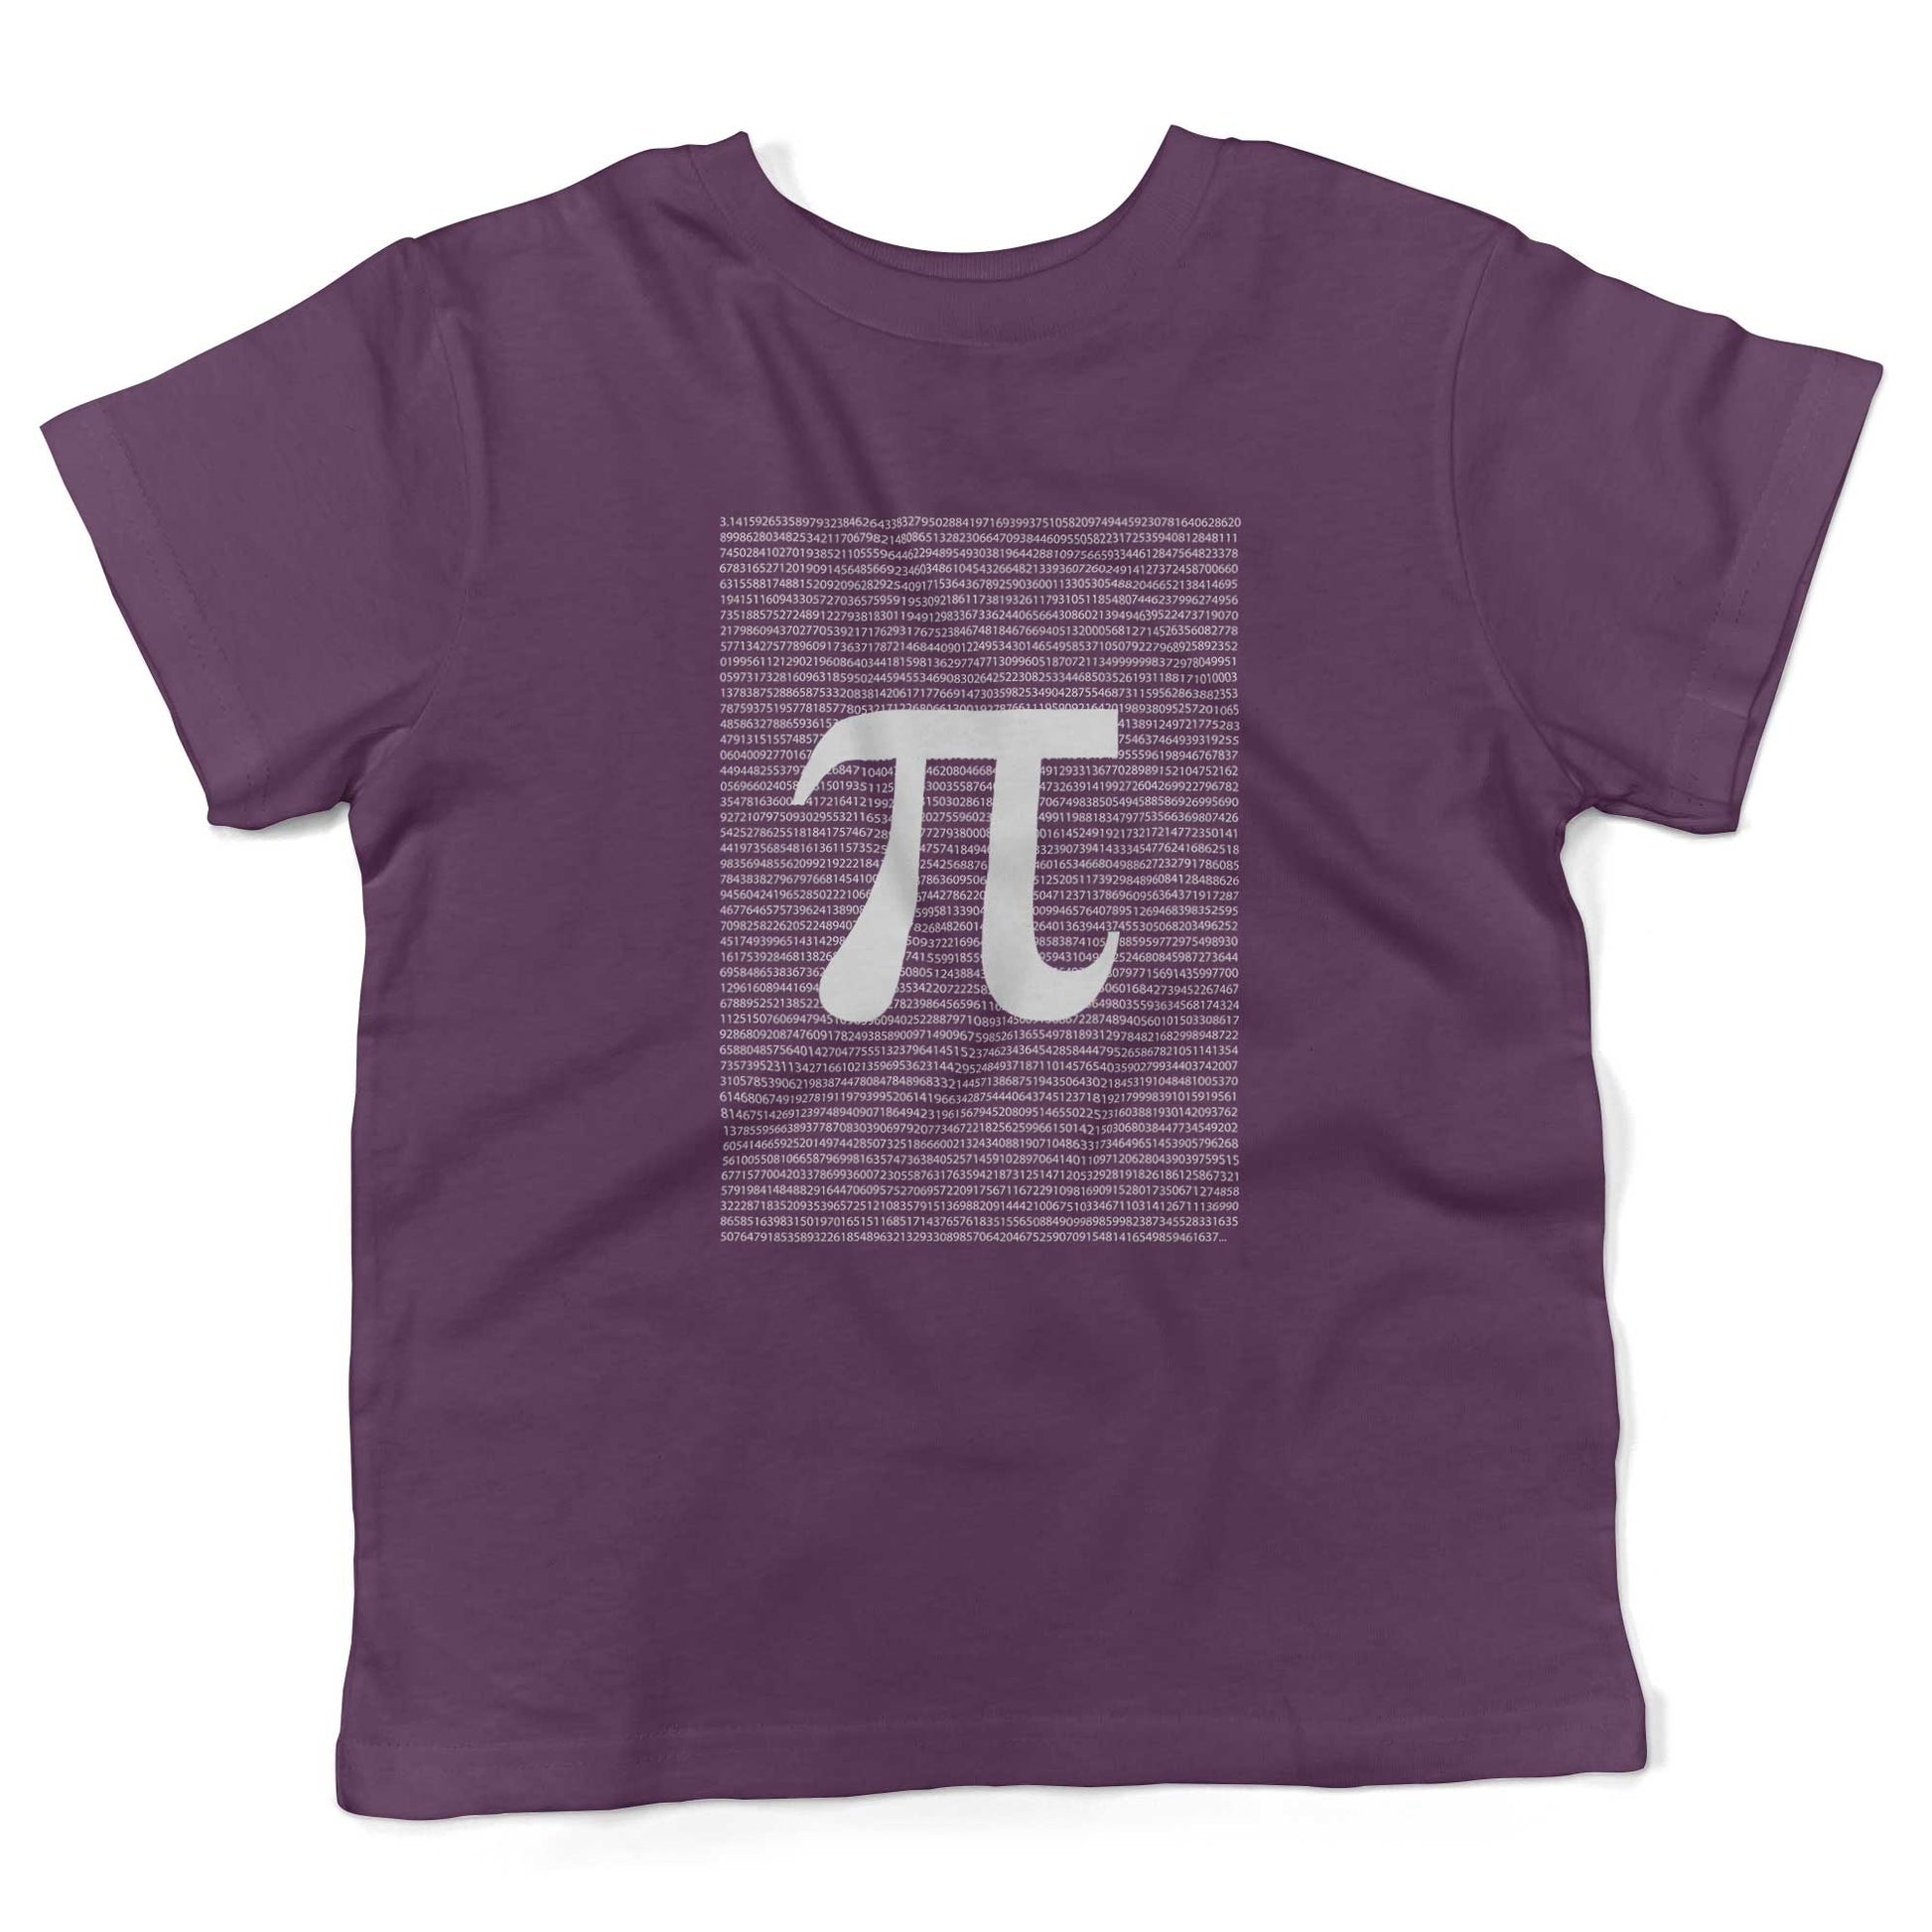 Irrational Pi Toddler Shirt-Organic Purple-2T